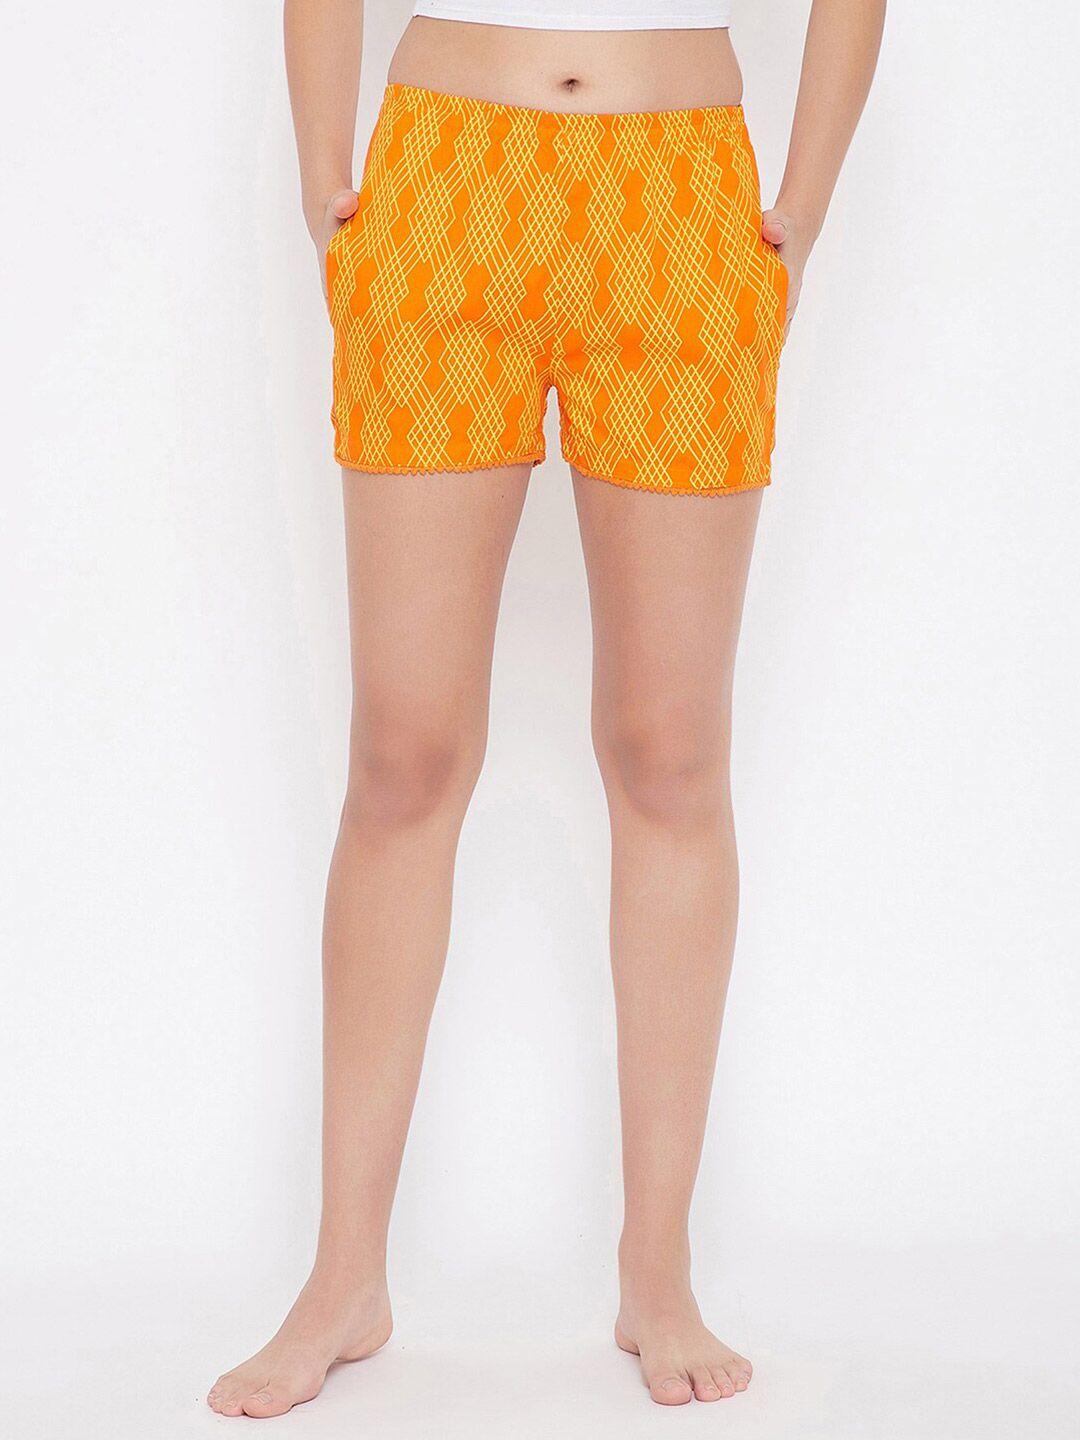 clovia-women-orange-&-yellow-printed-cotton-lounge-shorts-lb0194e16xxl